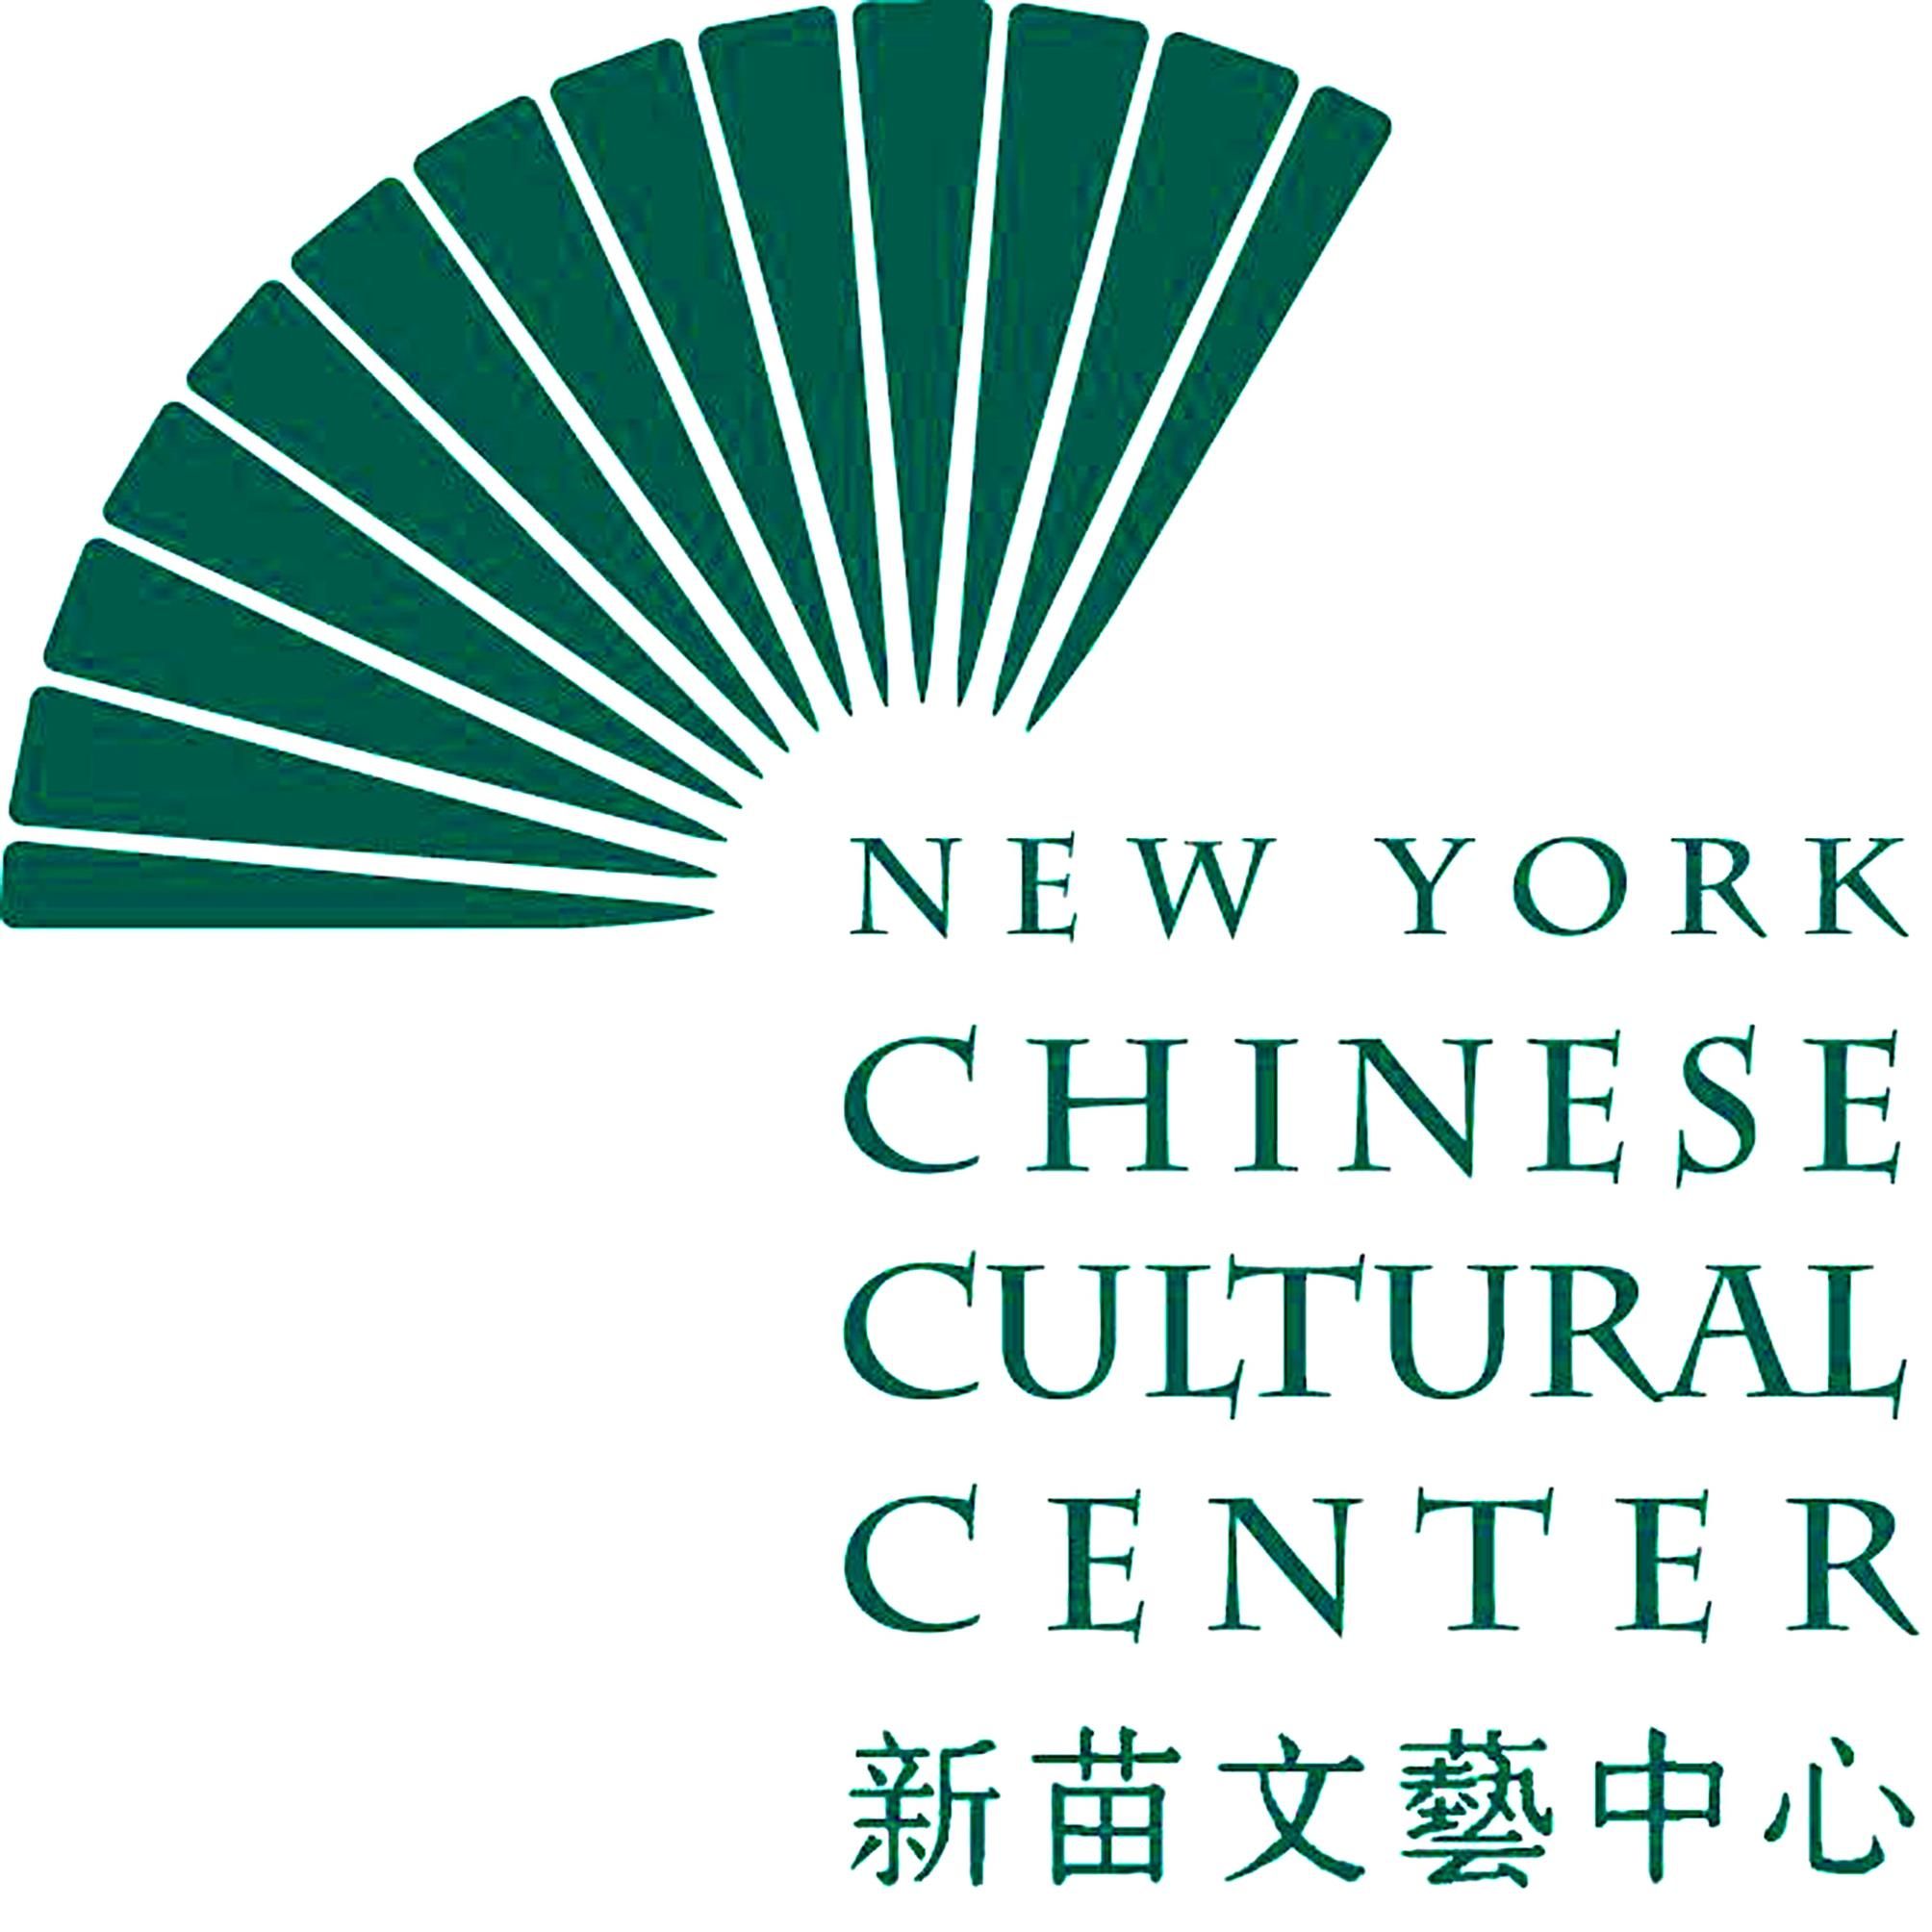 Mandarin Speaking Organization in New York New York - New York Chinese Cultural Center